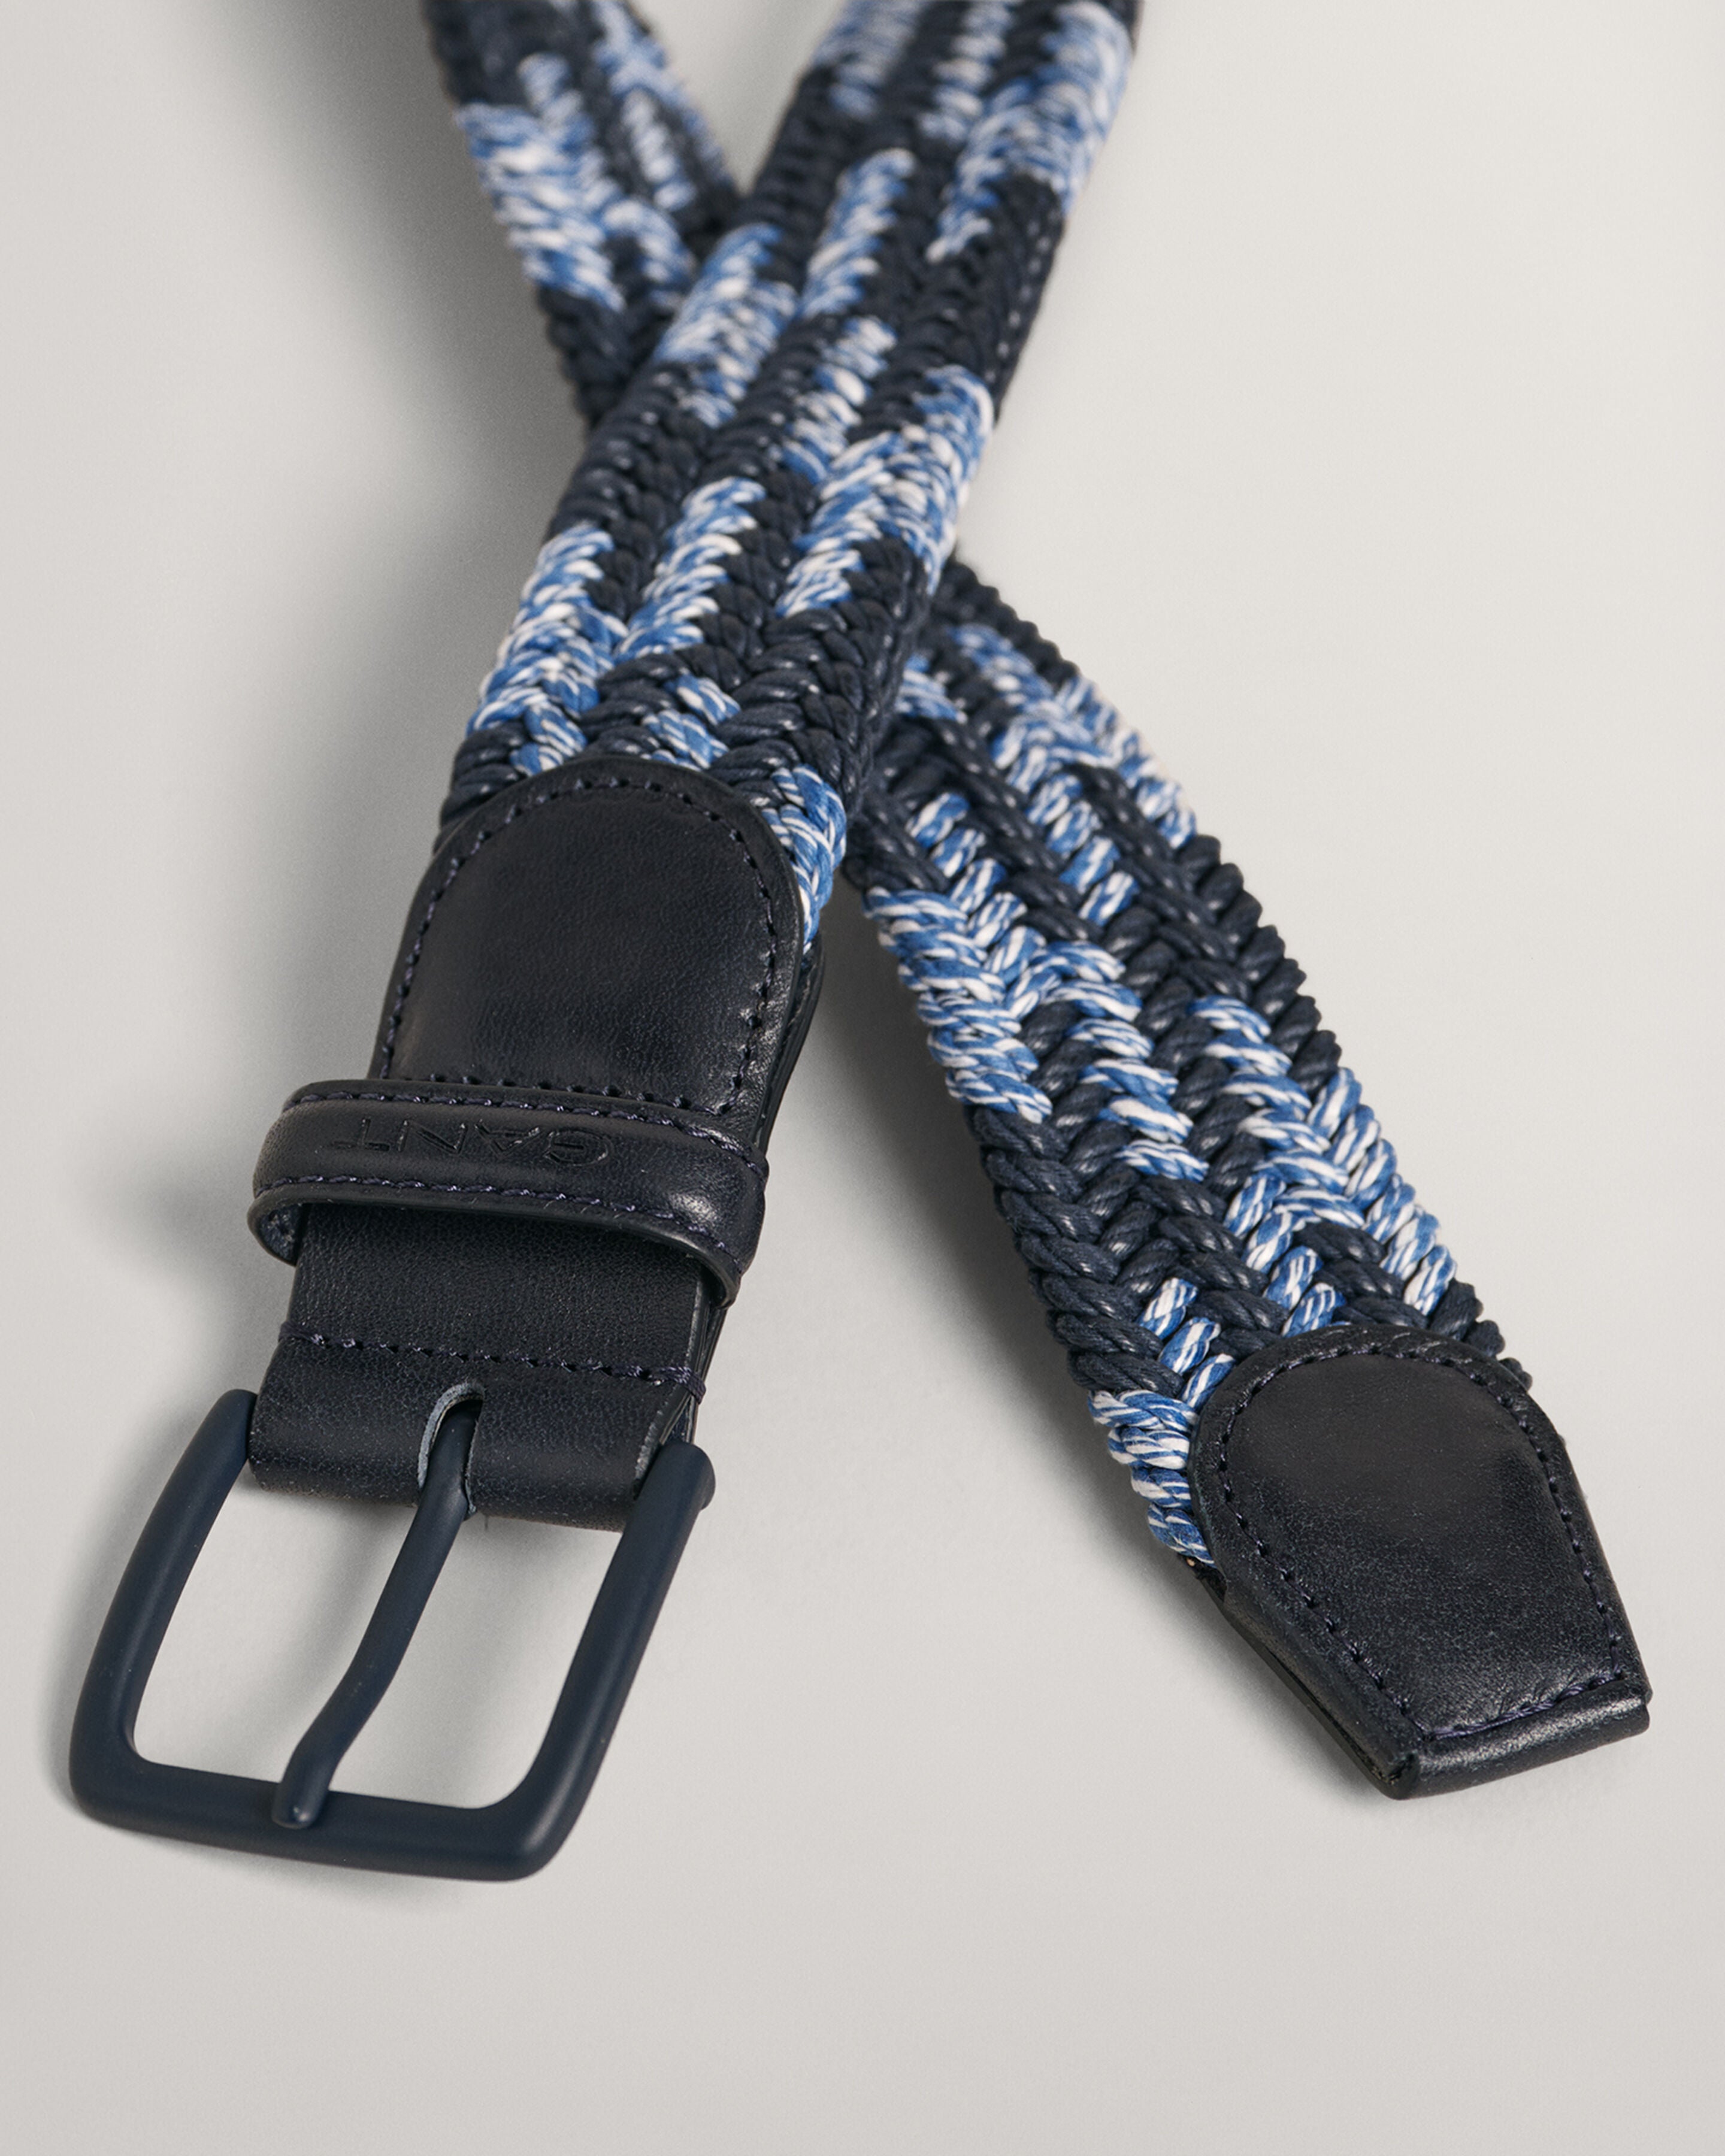 GANT - Contrast Braided Belt in Evening Blue 9940151 433